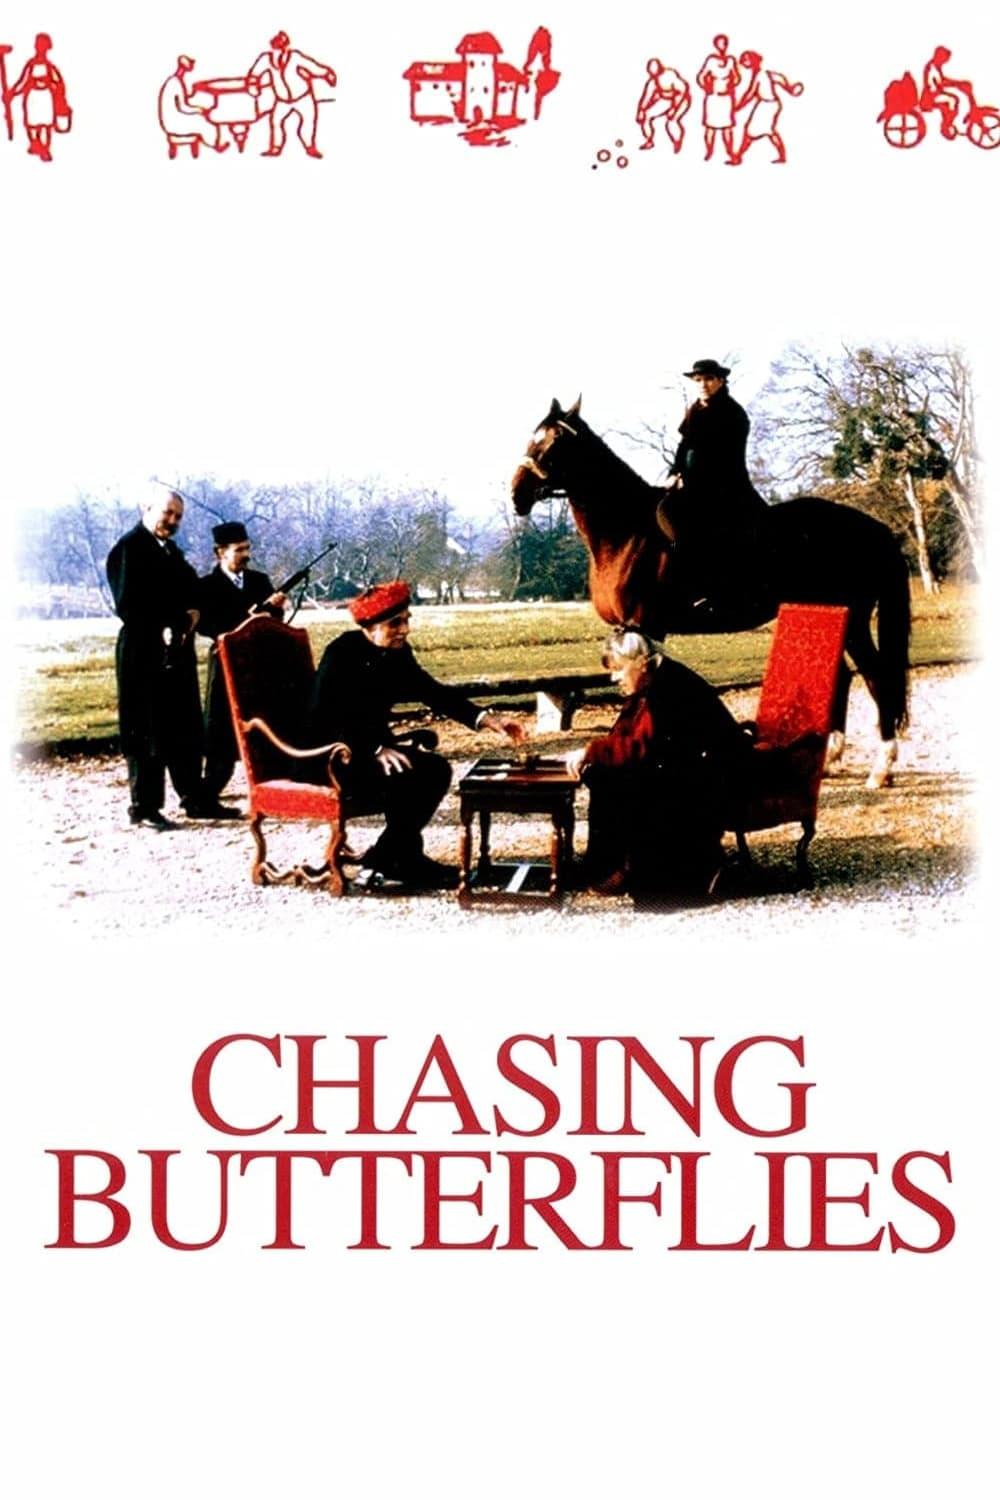 Chasing Butterflies poster